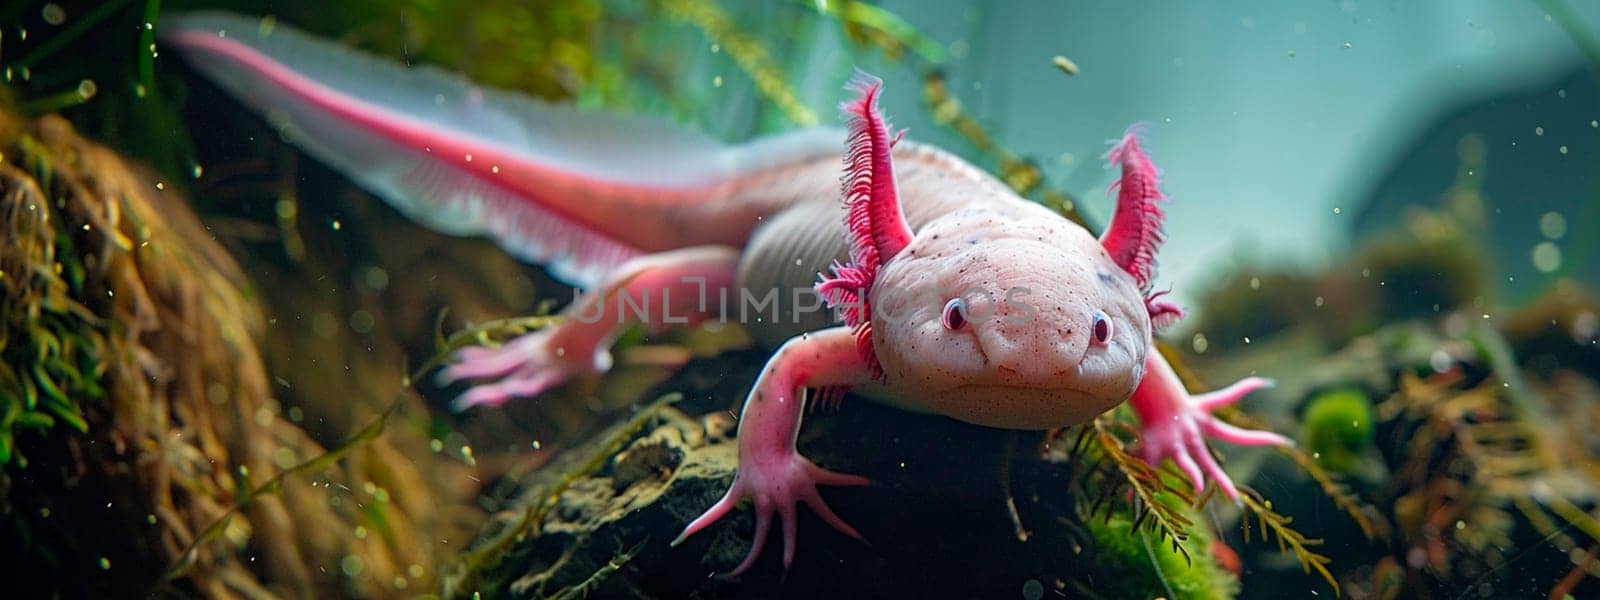 axolotl in aquarium water. Selective focus. animal.